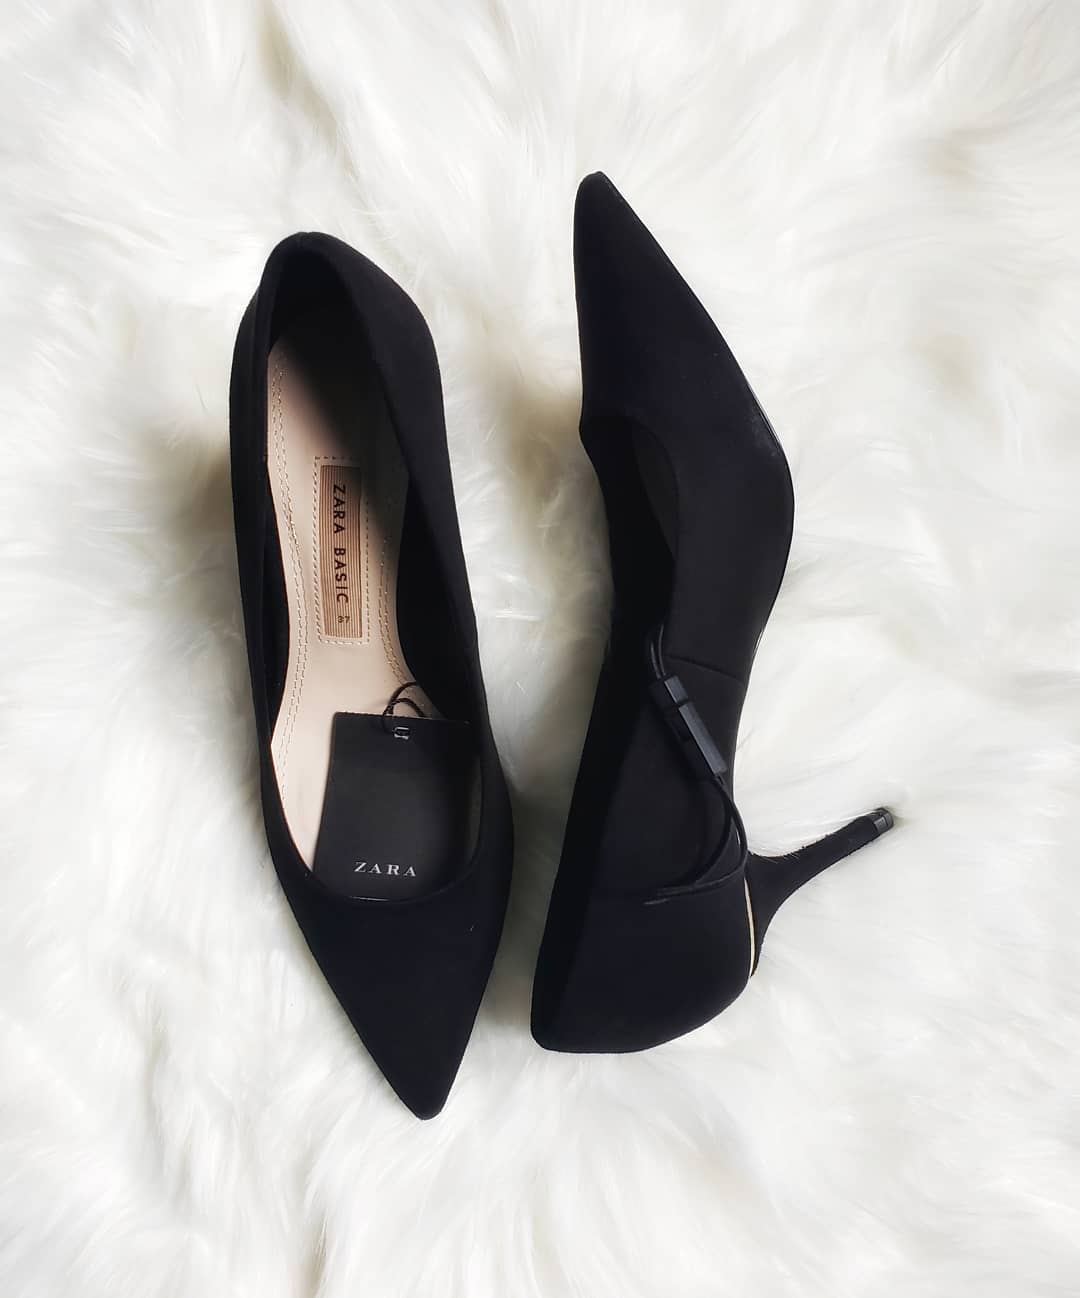 Zara collection metallic gold and suede 3” heels | Heels, Sandals heels,  Fashion shoes